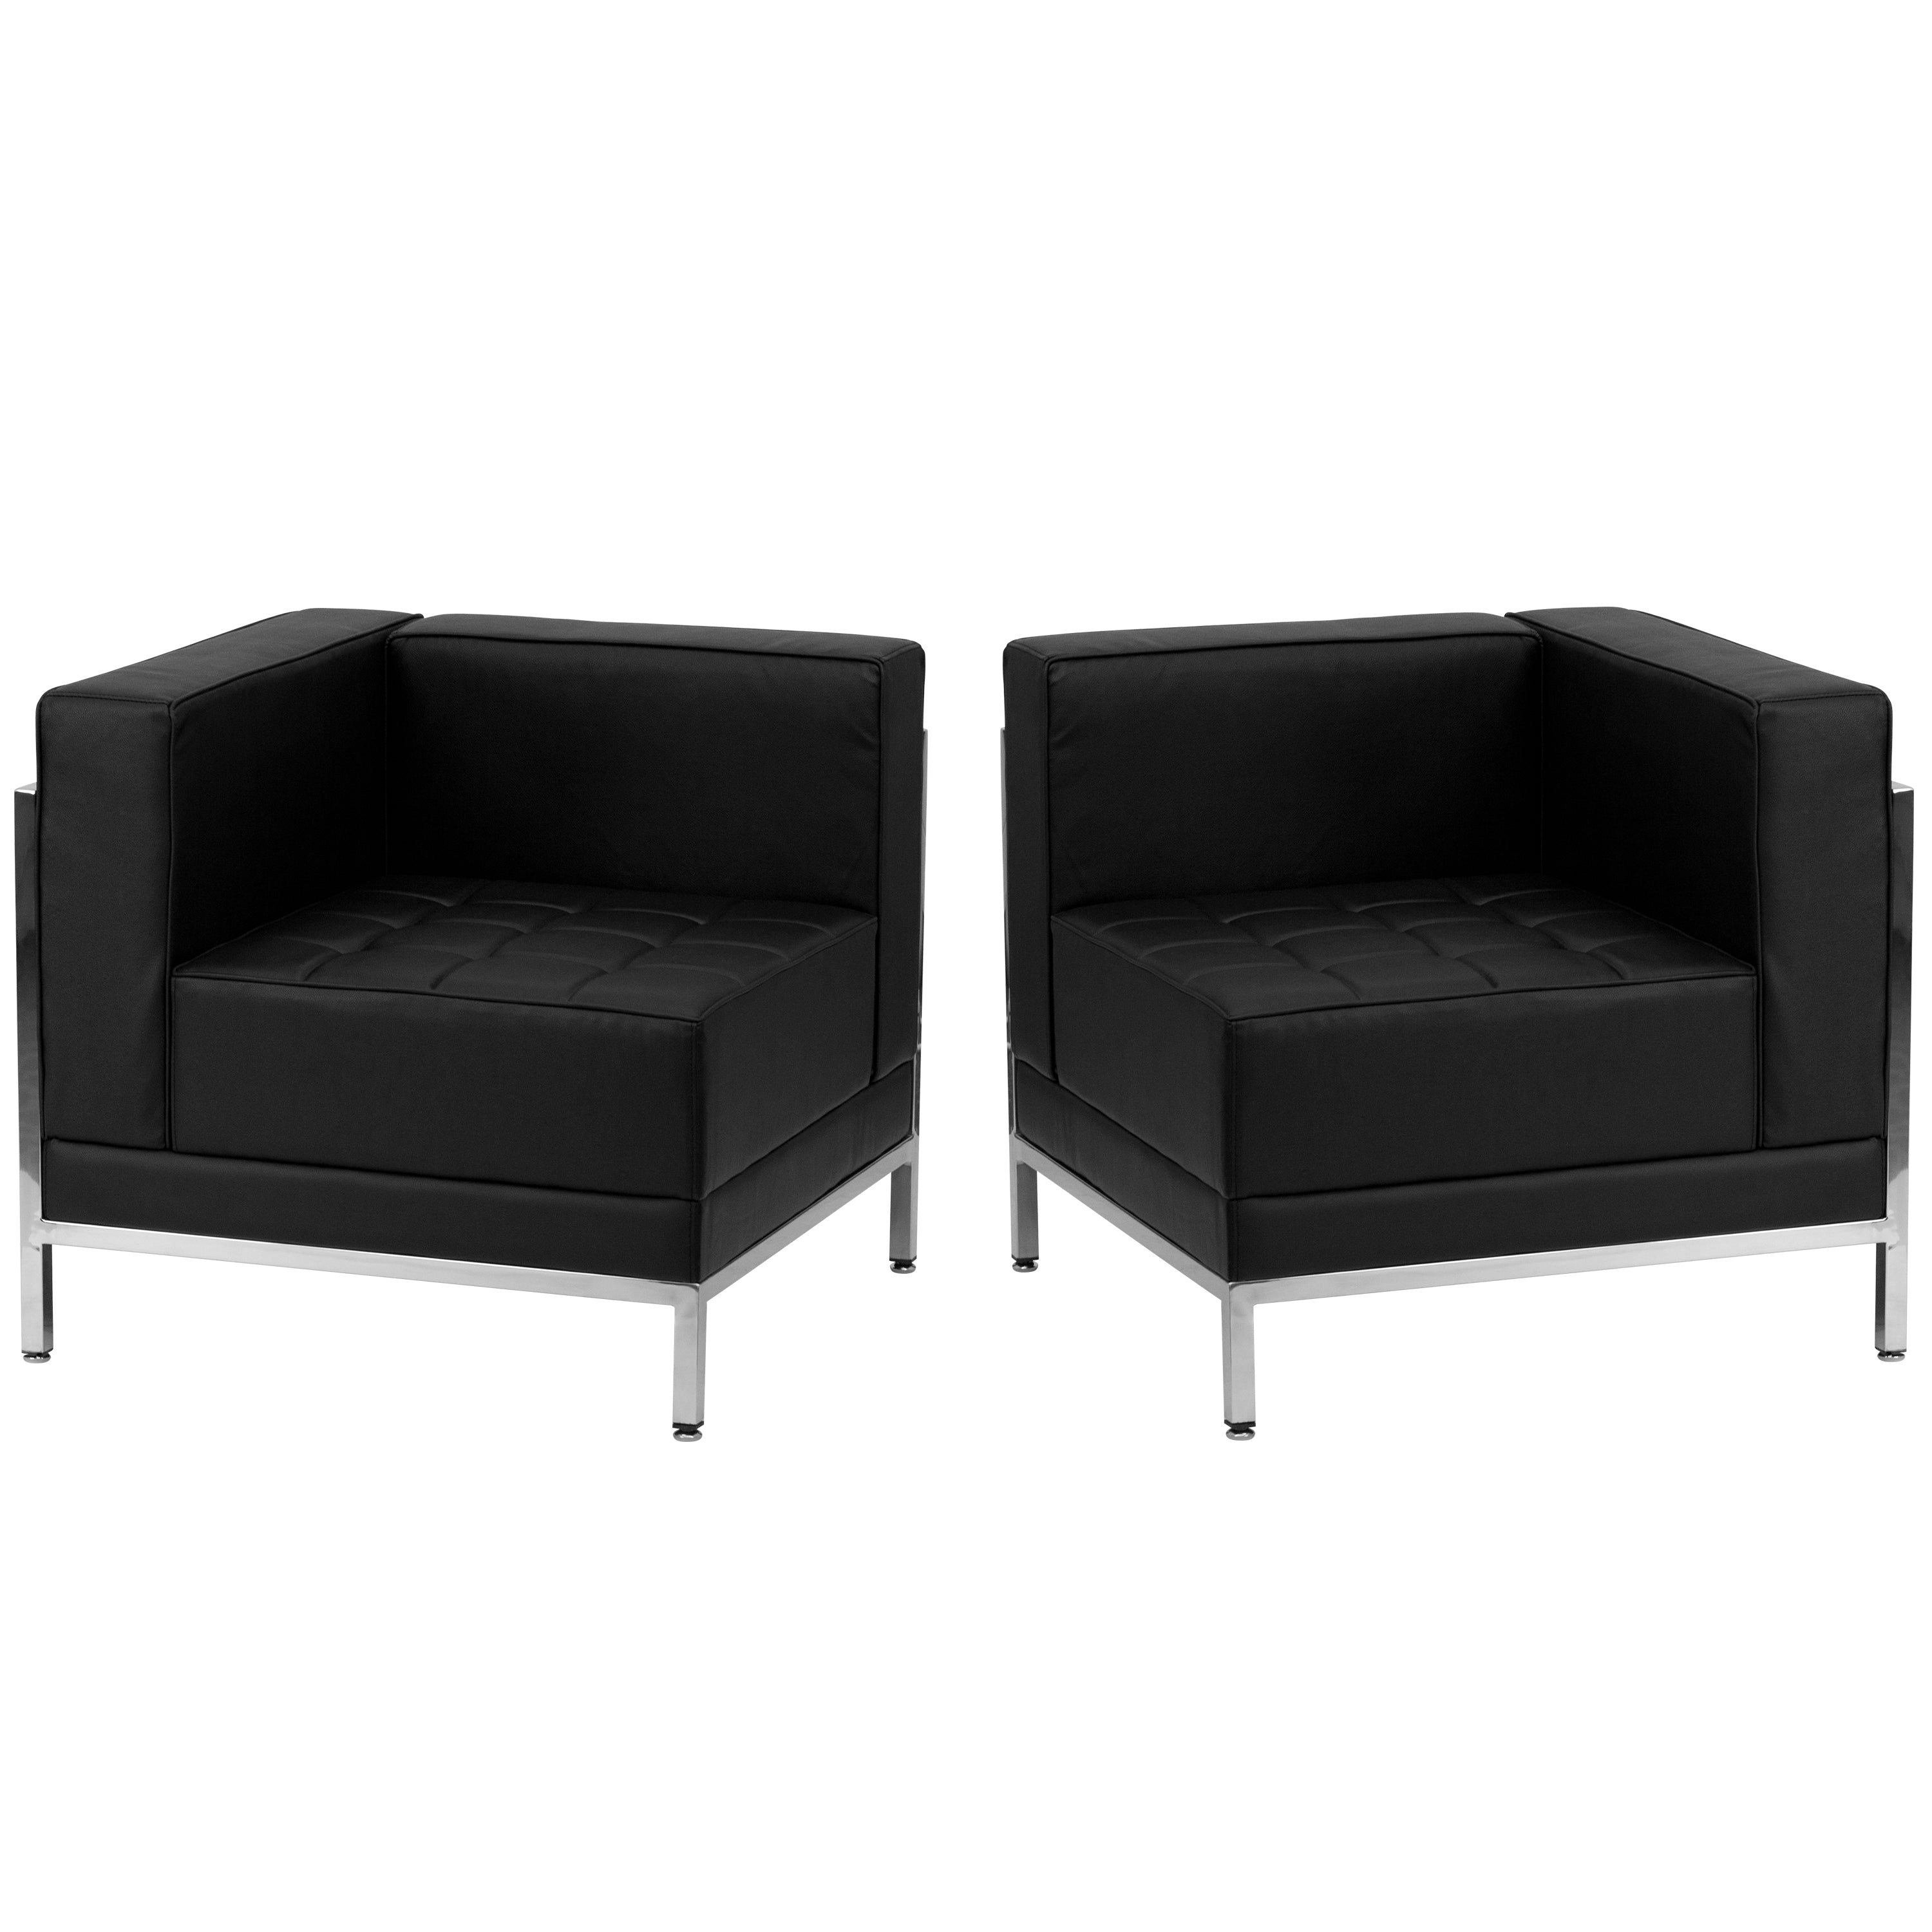 HERCULES Imagination Series LeatherSoft 2 Piece Corner Chair Set-Modular Reception Set-Flash Furniture-Wall2Wall Furnishings